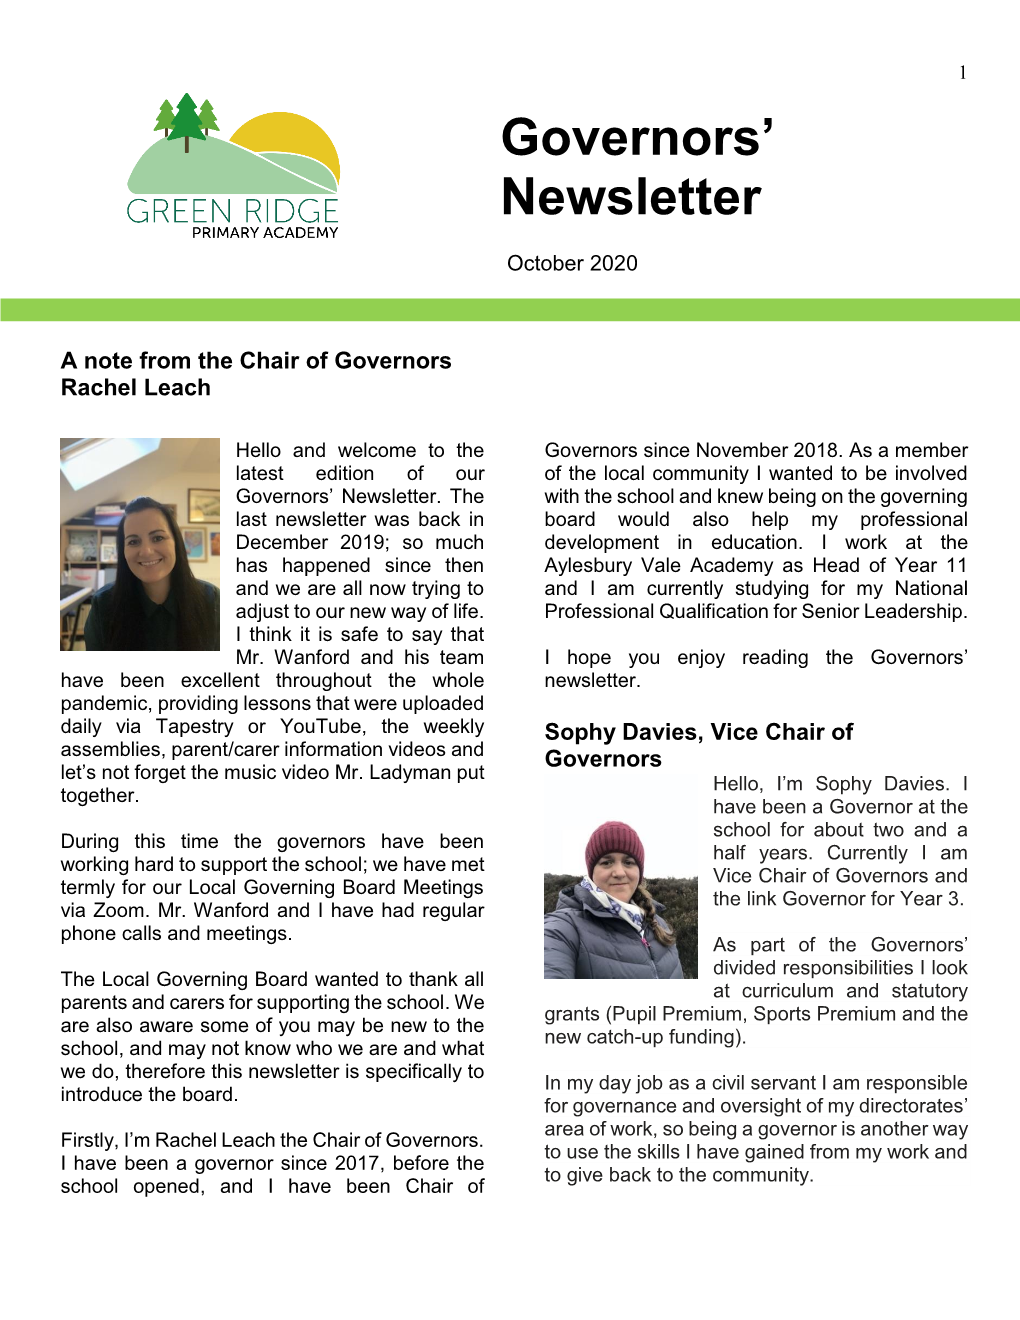 Governors' Newsletter